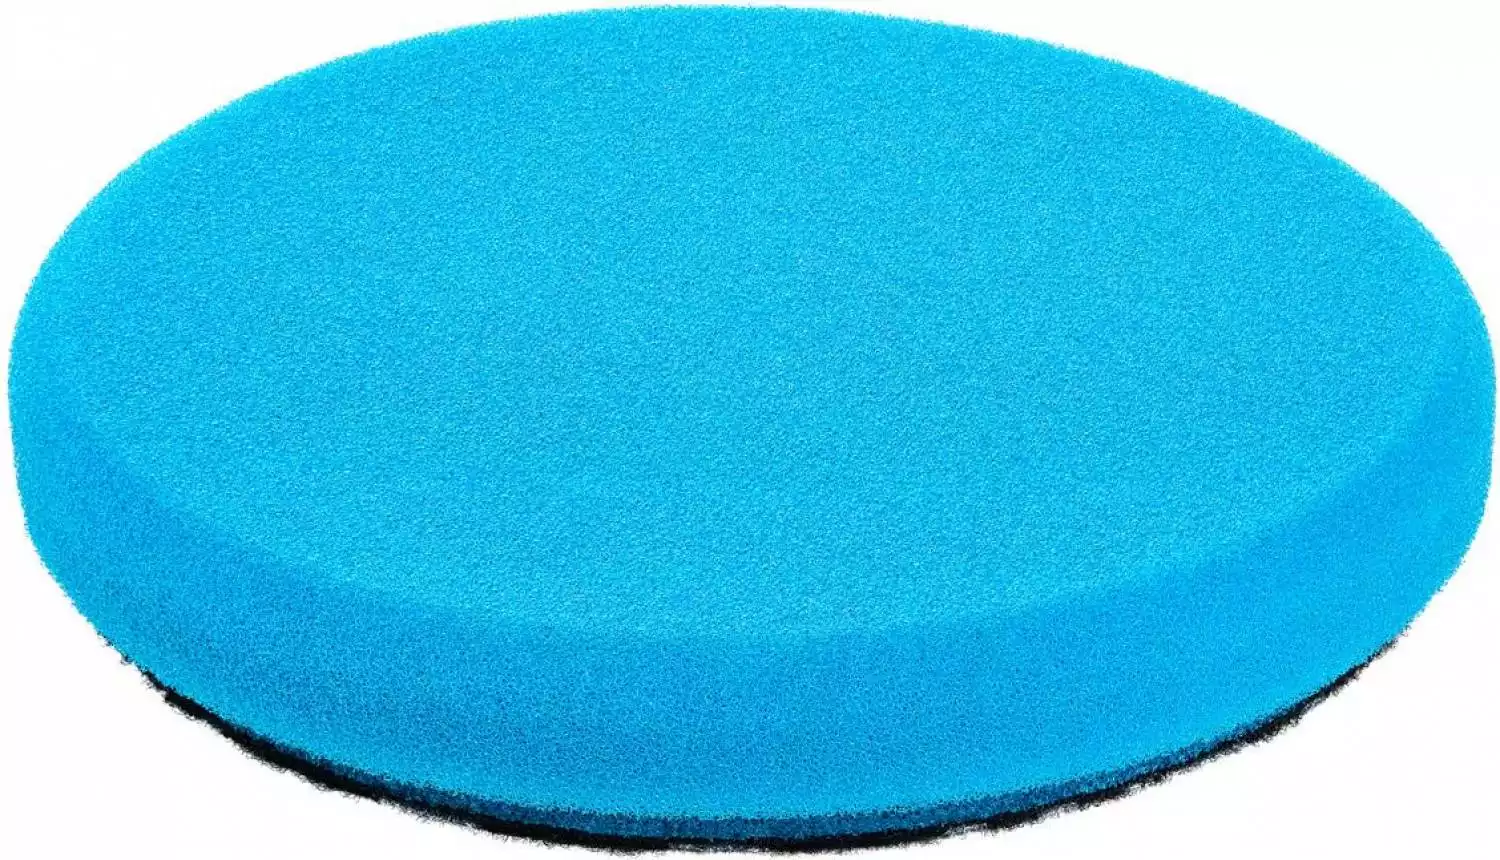 Medium Cutting Pad blau 160 x 20 mm, 2er Pack